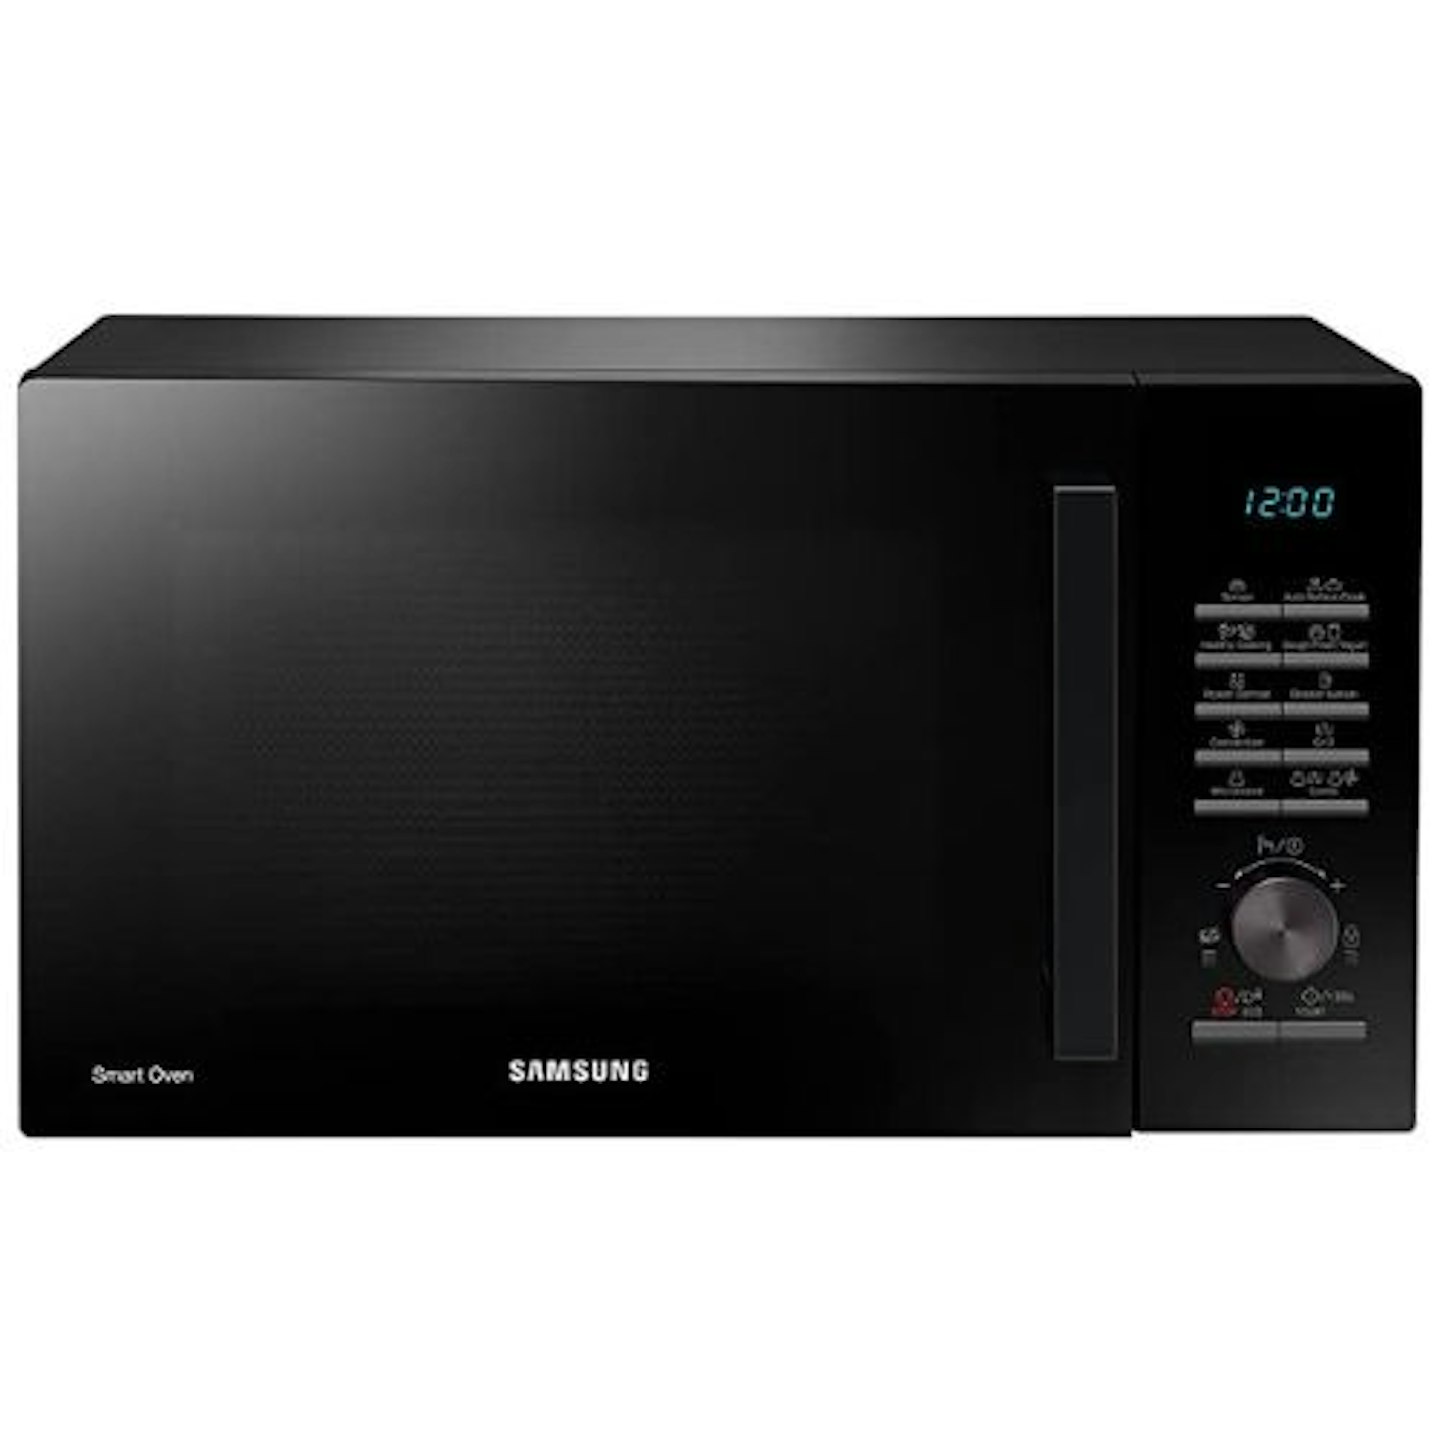 Samsung MC28A5125AK Convection Microwave